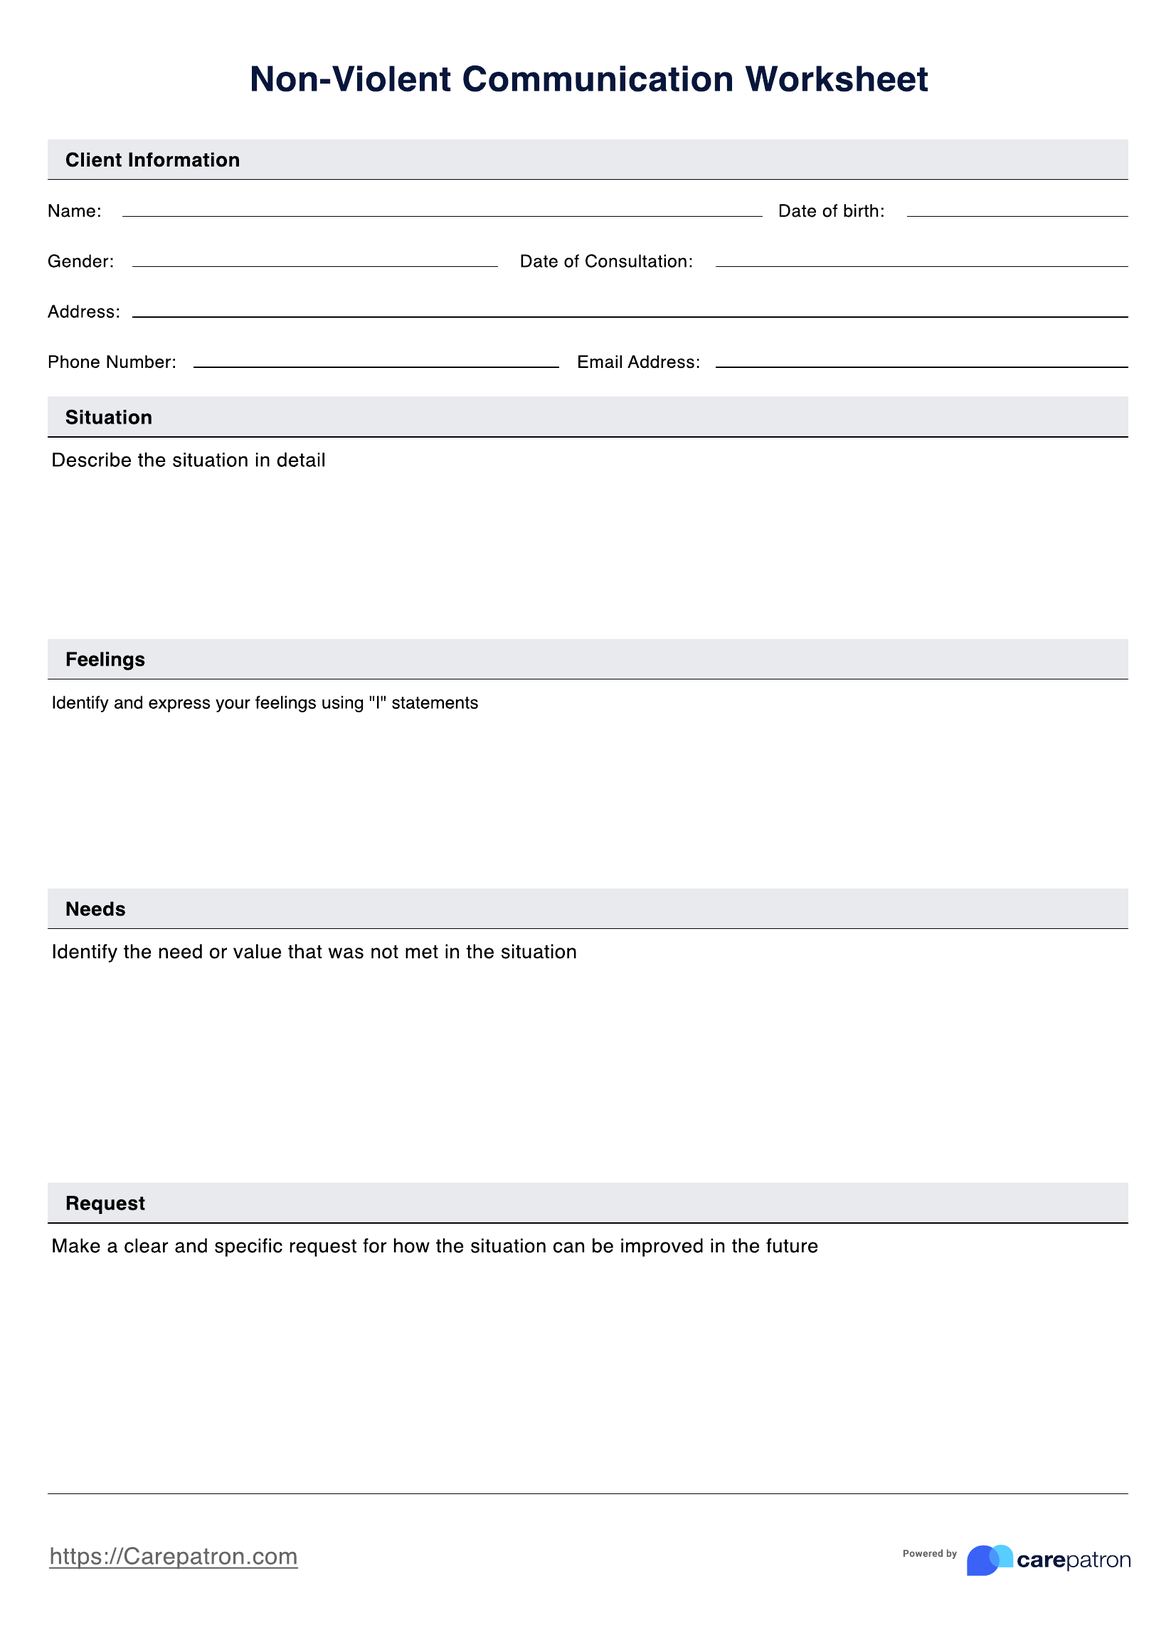 Nonviolent Communication Worksheet PDF Example